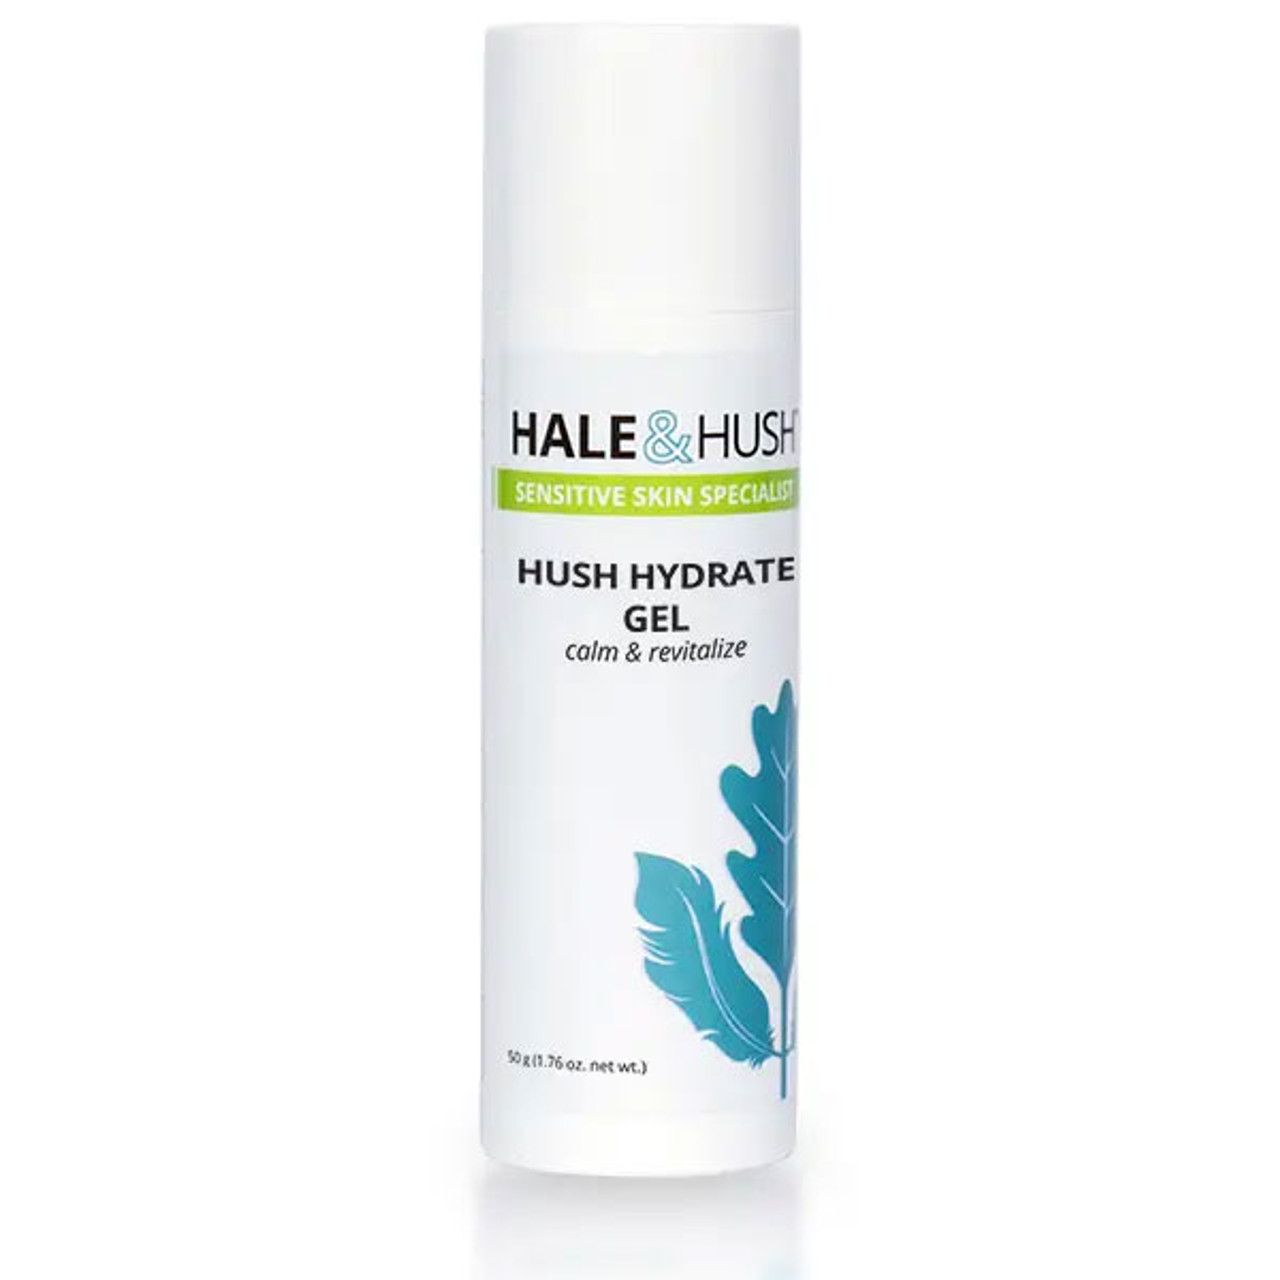 Hale & Hush Hydrate Gel - 1.7 oz